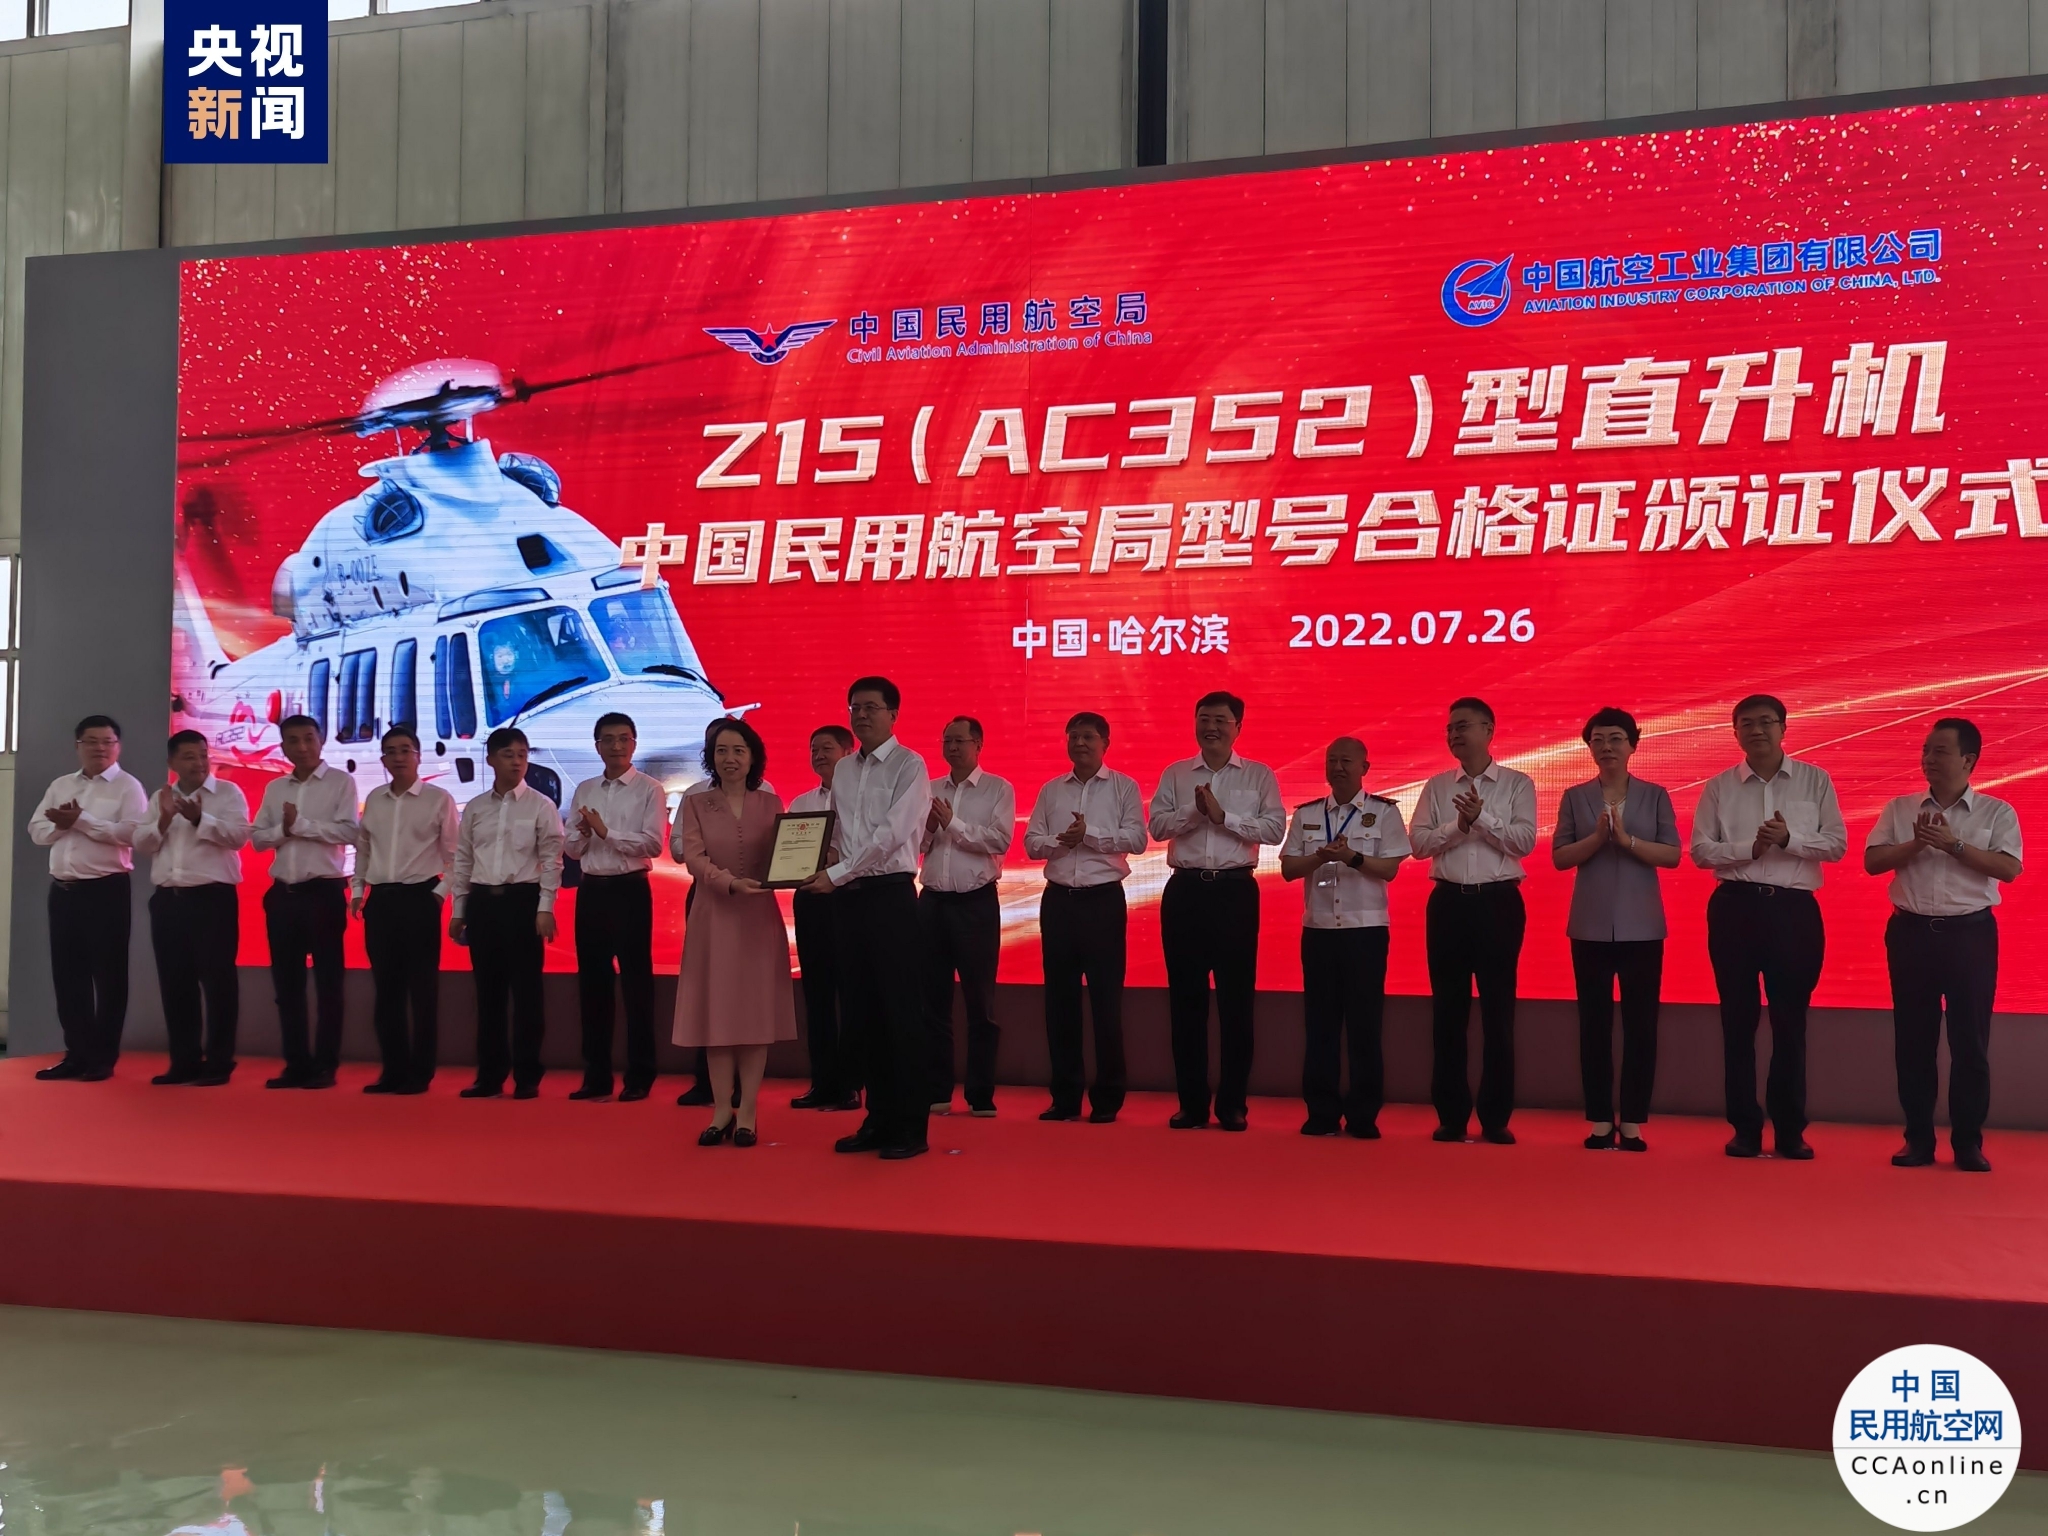 Z15（AC352）直升机获中国民航型号合格证